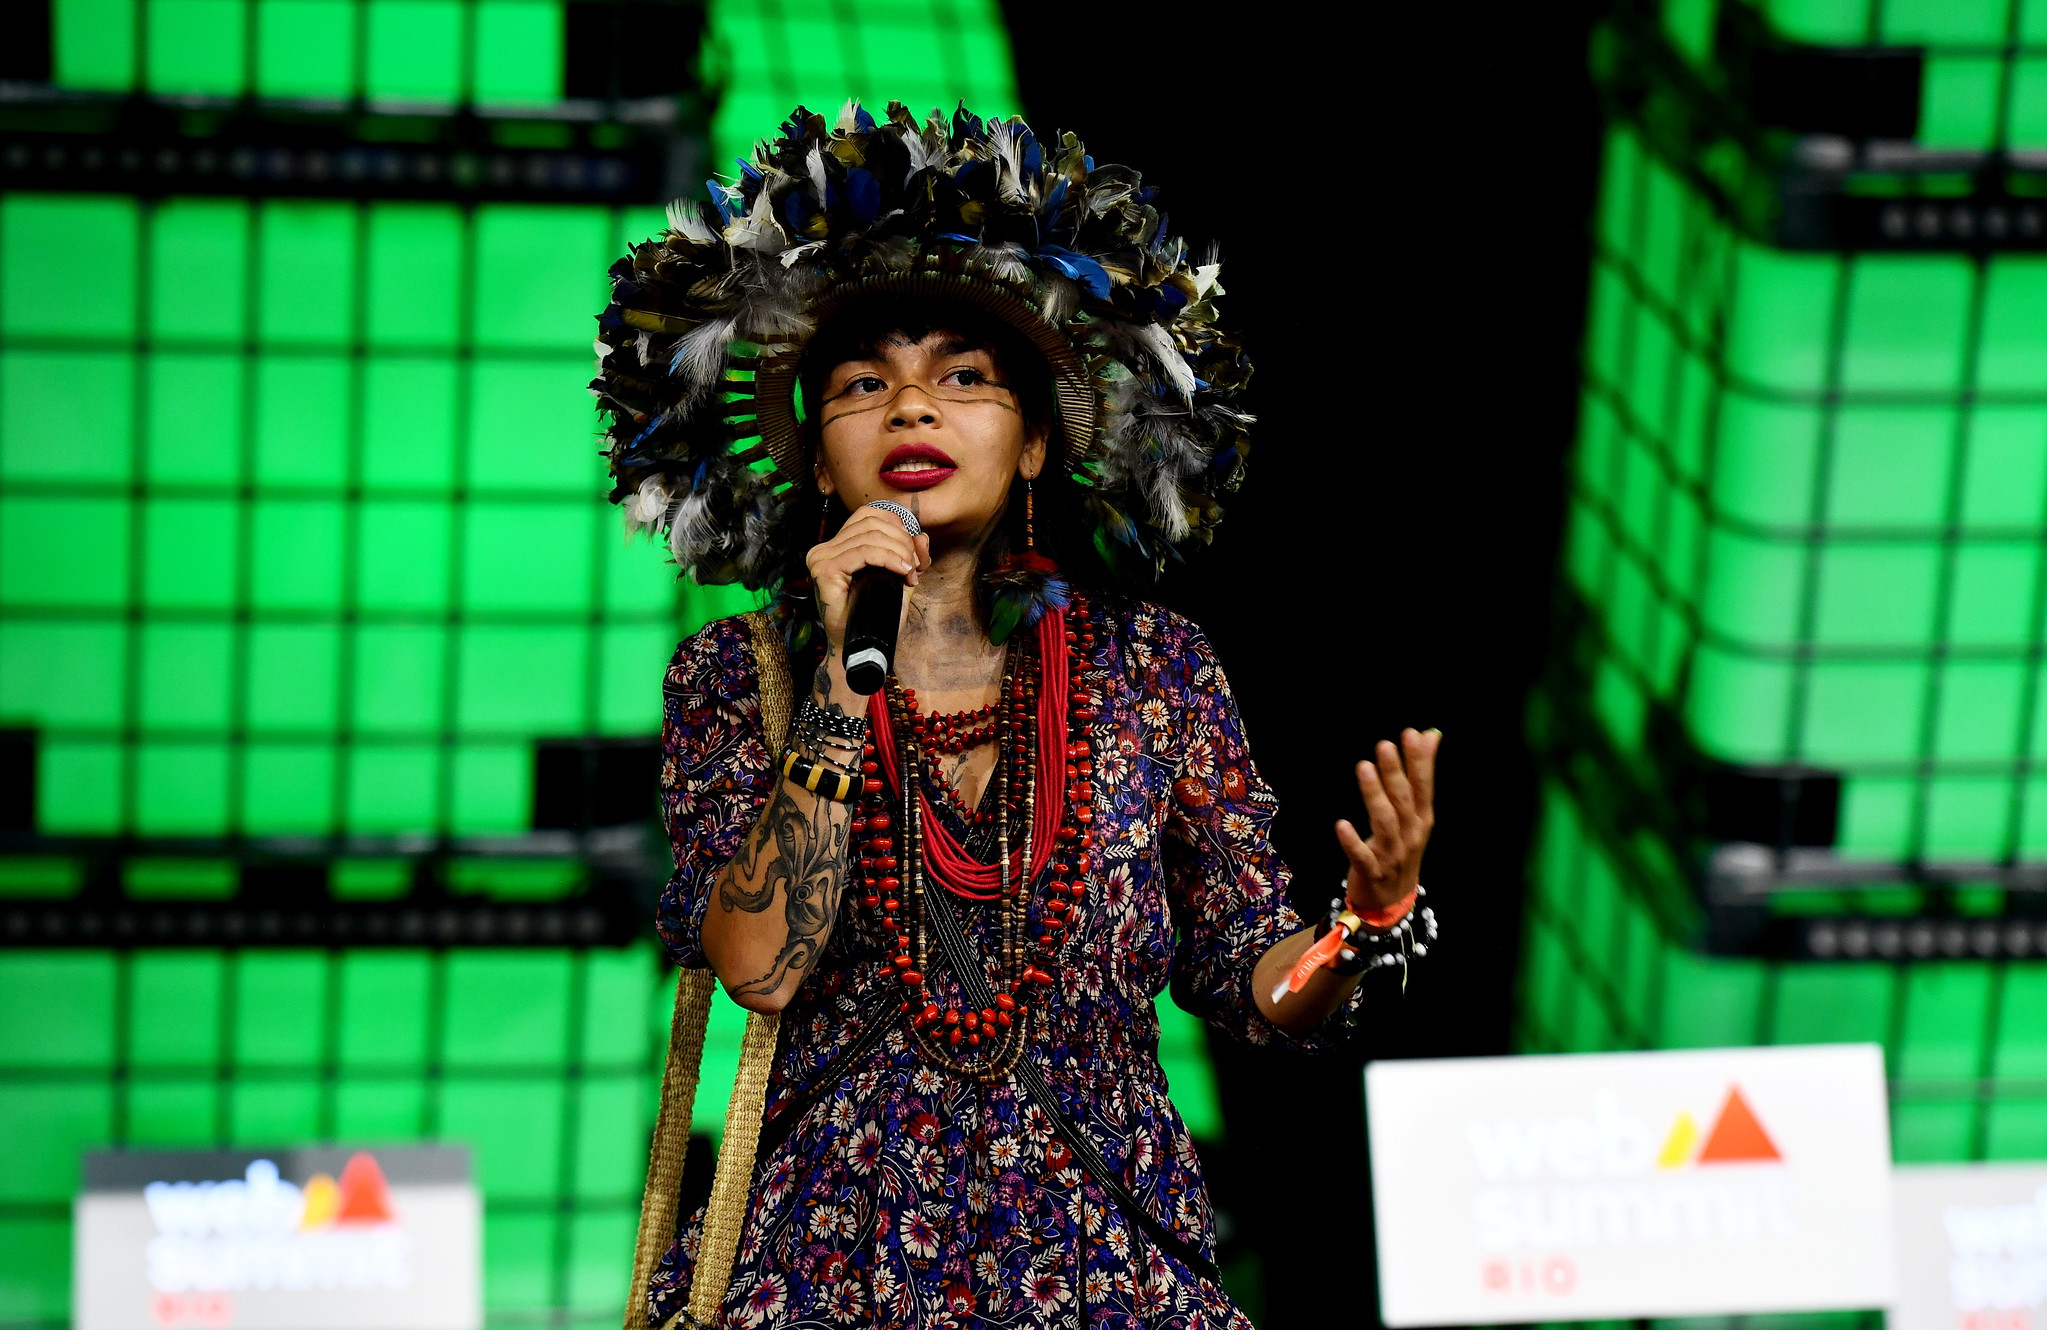 Amazonian Activist Txai Suruí on Centre Stage during the opening night of Web Summit Rio 2023 at Riocentro in Rio de Janeiro, Brazil